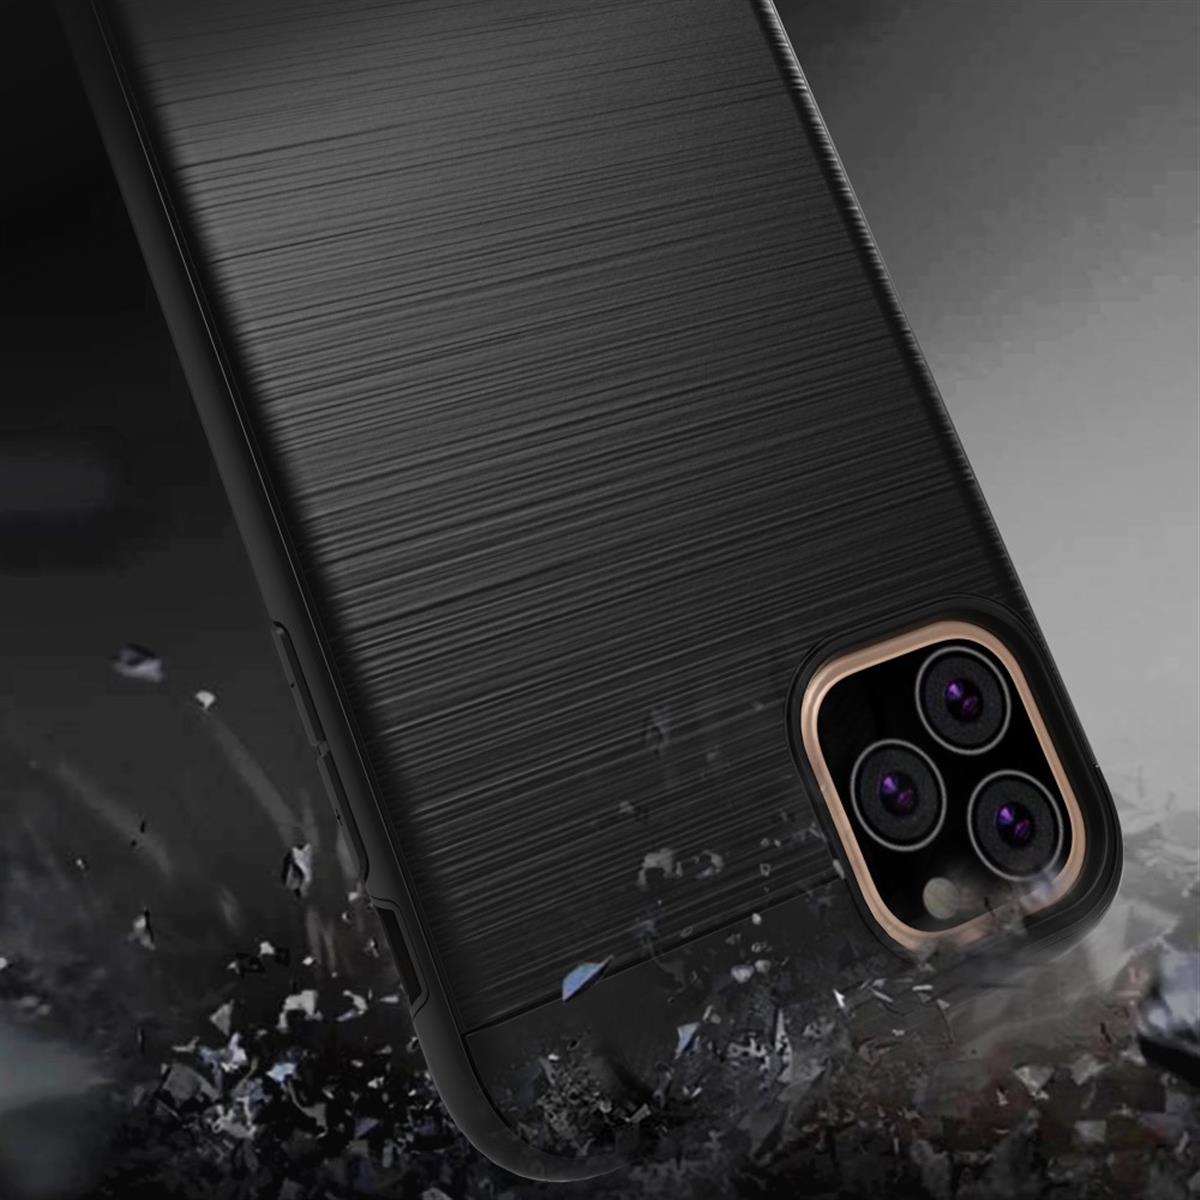 Hülle für Apple iPhone 11 [6,1 Zoll] Handyhülle Silikon Hybrid Case Carbonfarben